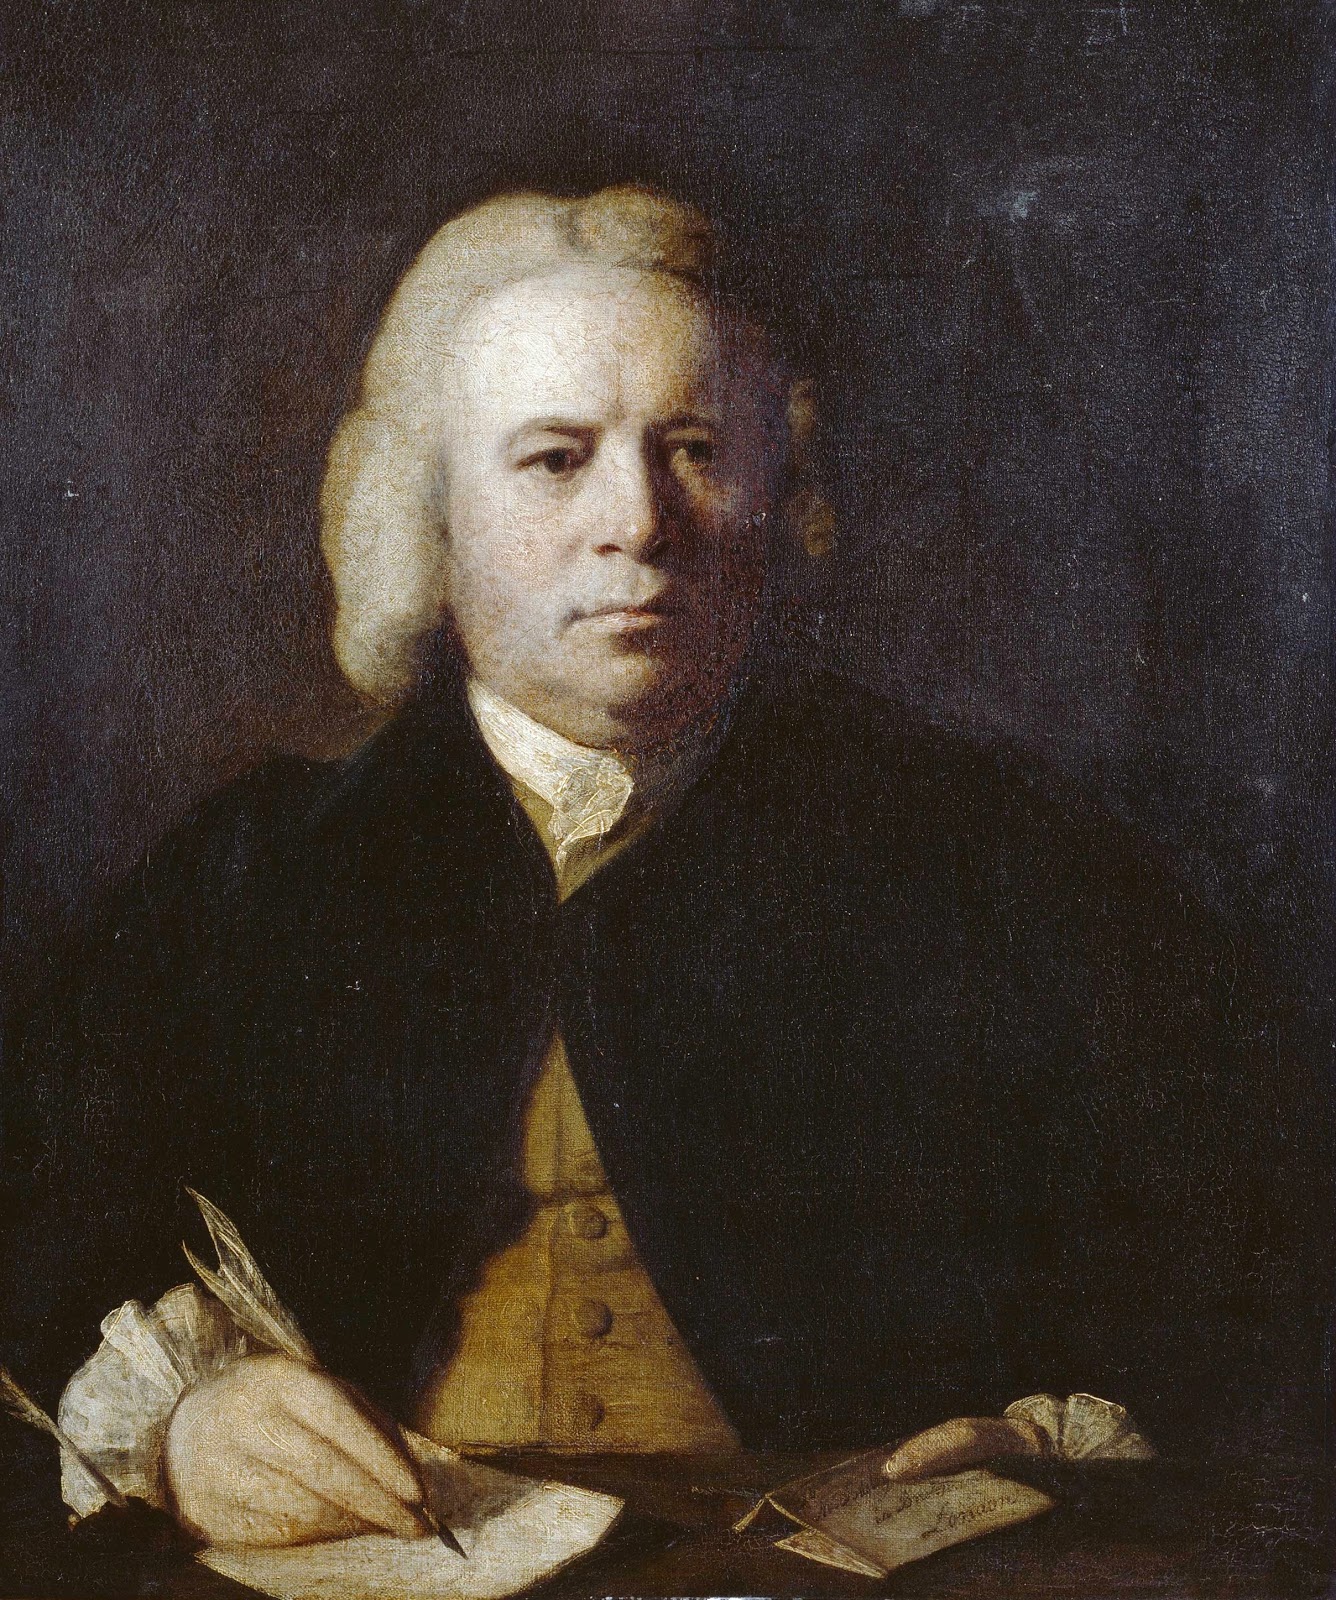 Joshua+Reynolds-1723-1792 (138).jpg